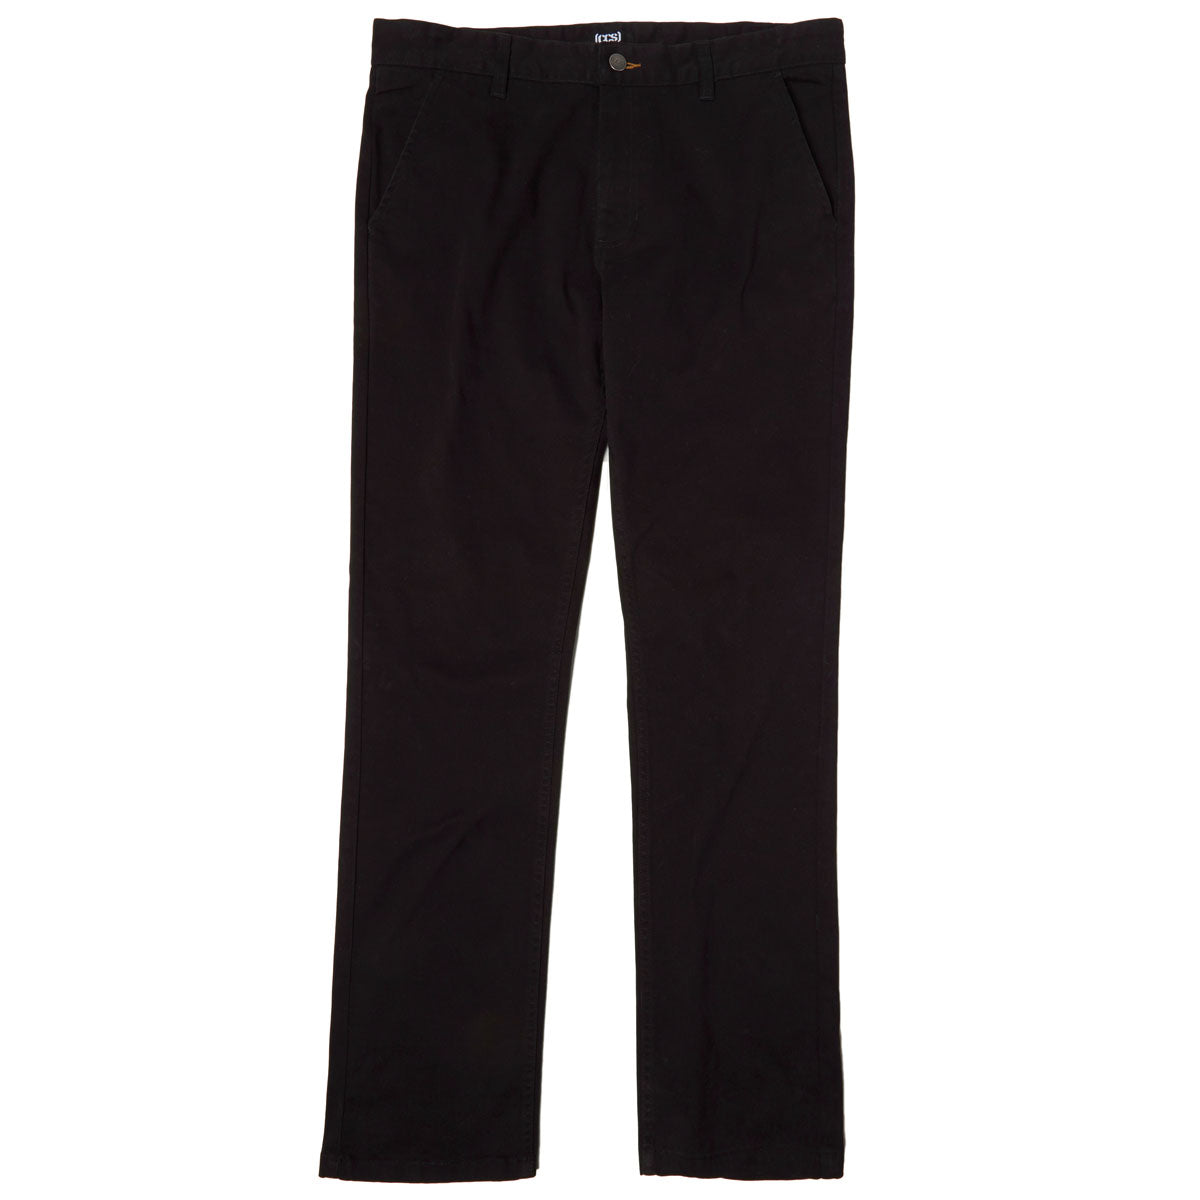 CCS Standard Plus Straight Chino Pants - Black image 5